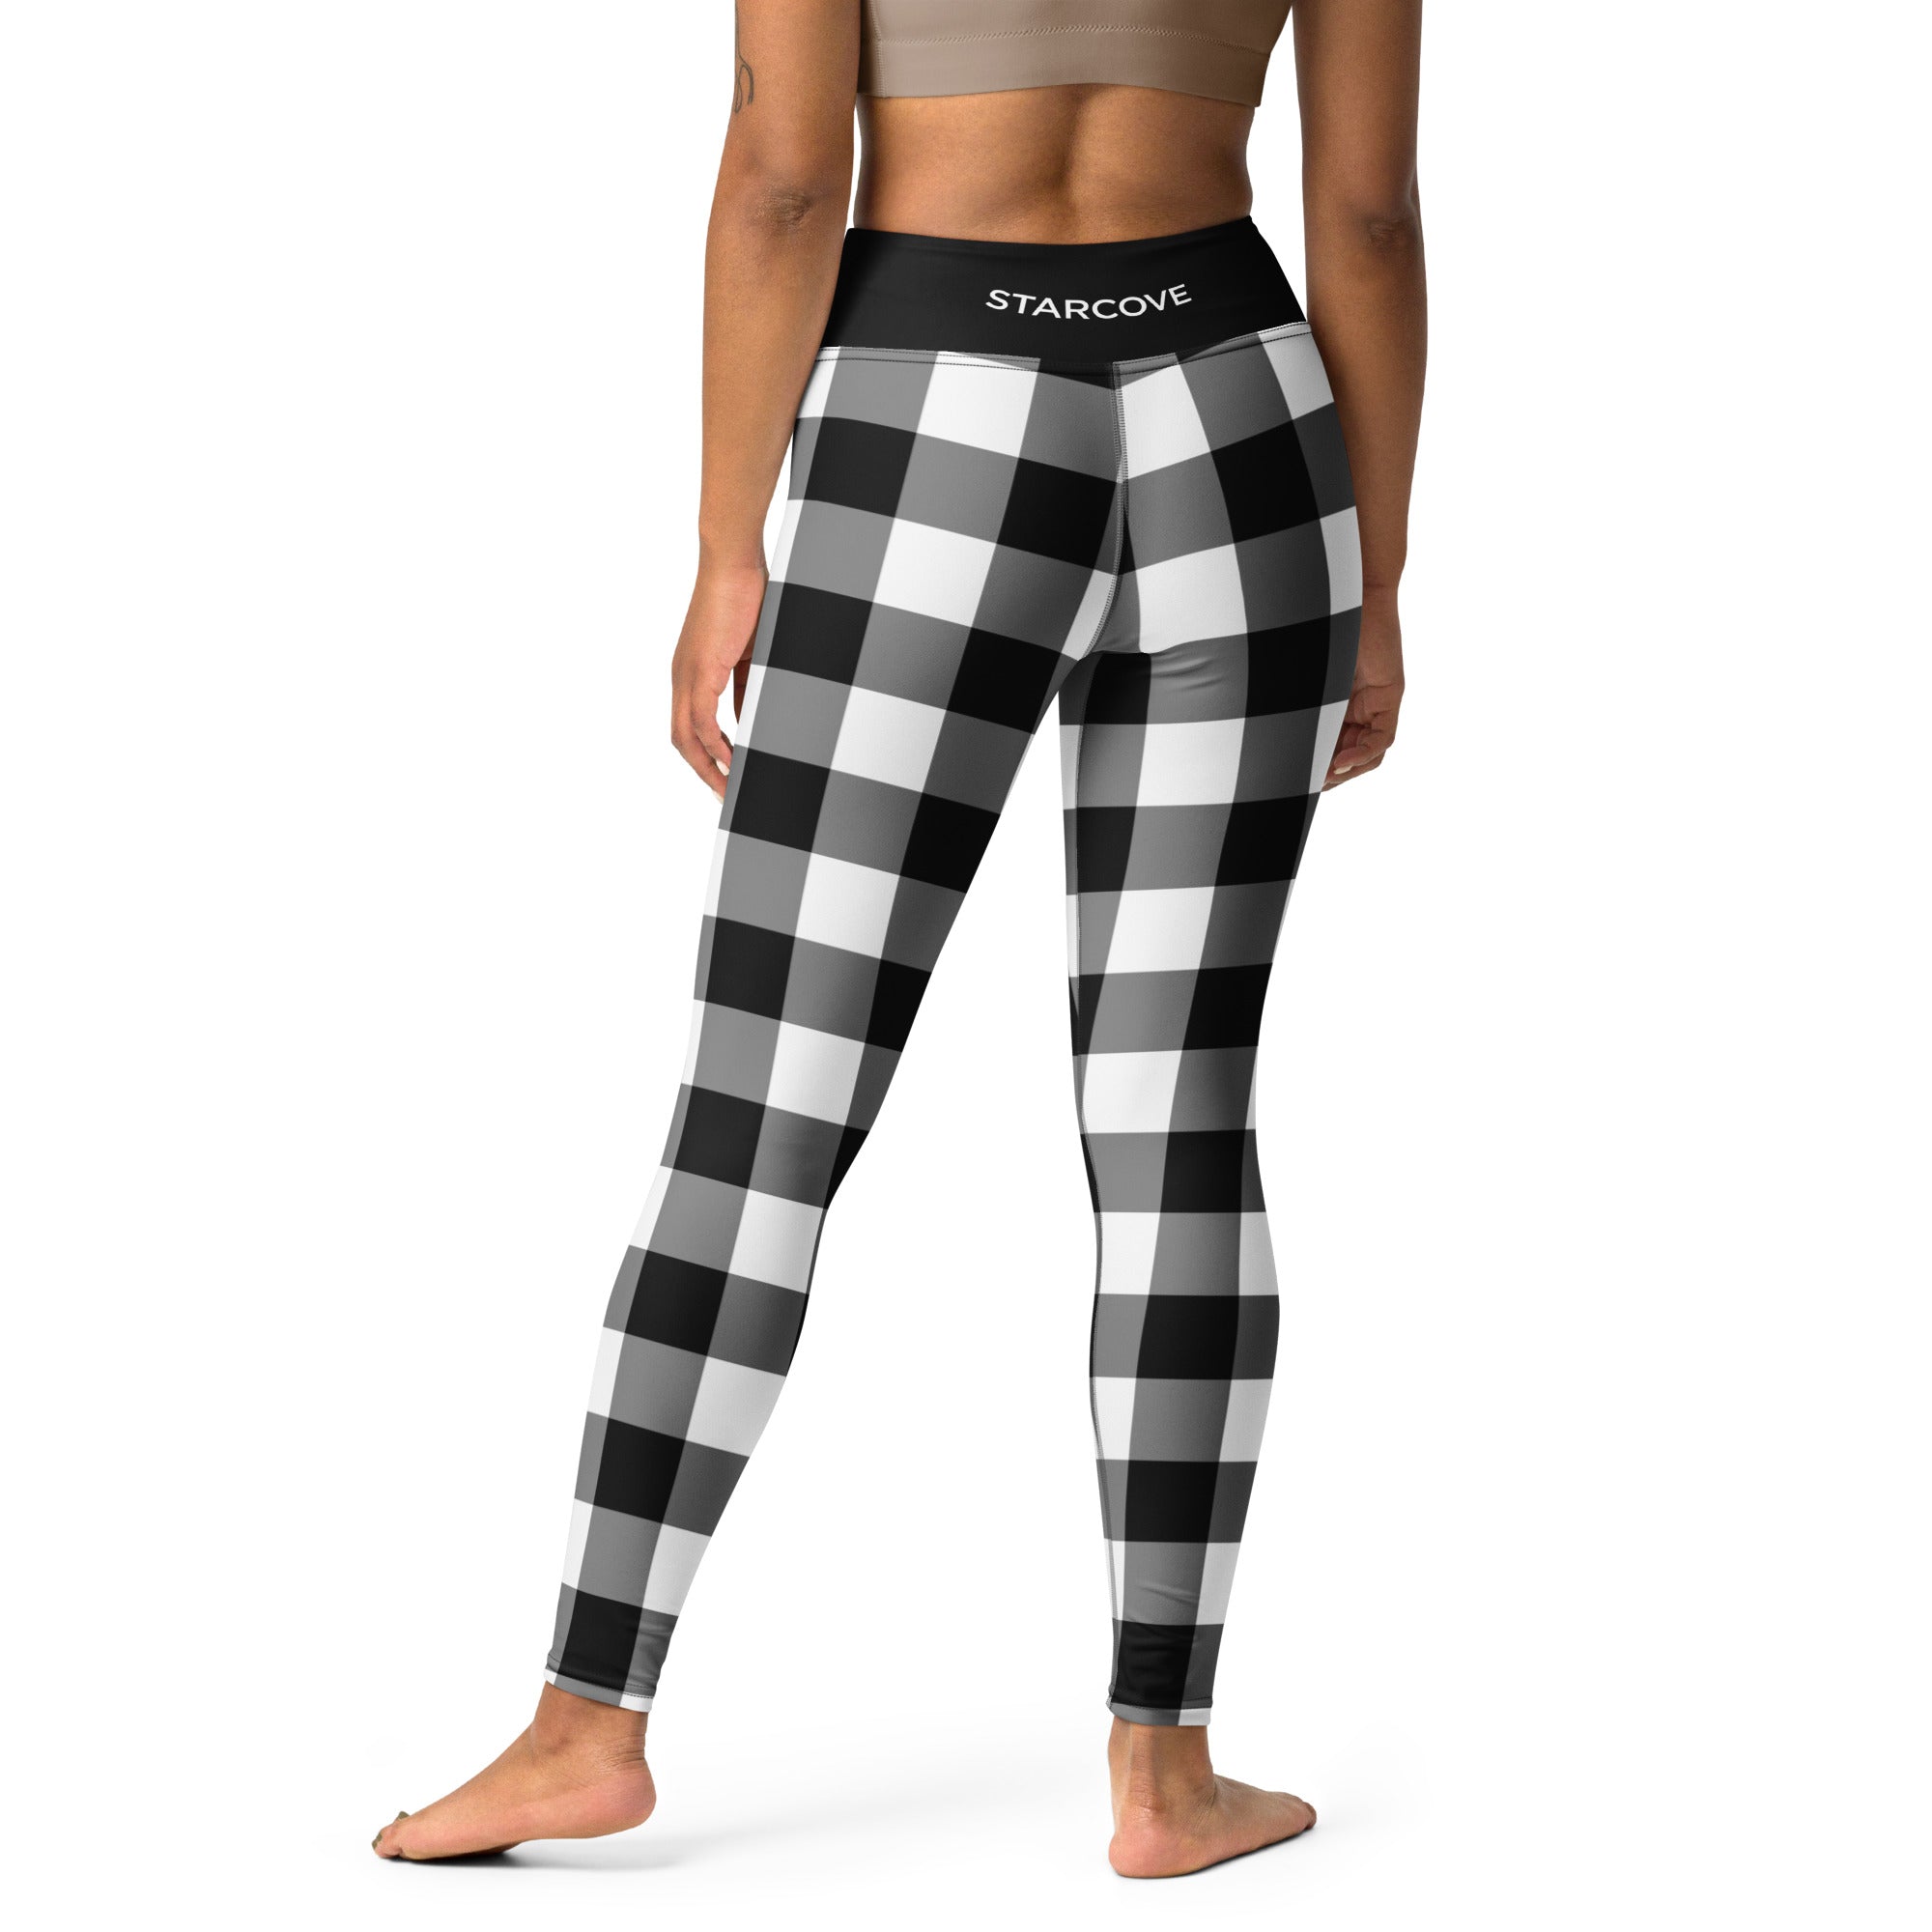 Zara High Waist Plaid Check Leggings Pants Size M | eBay